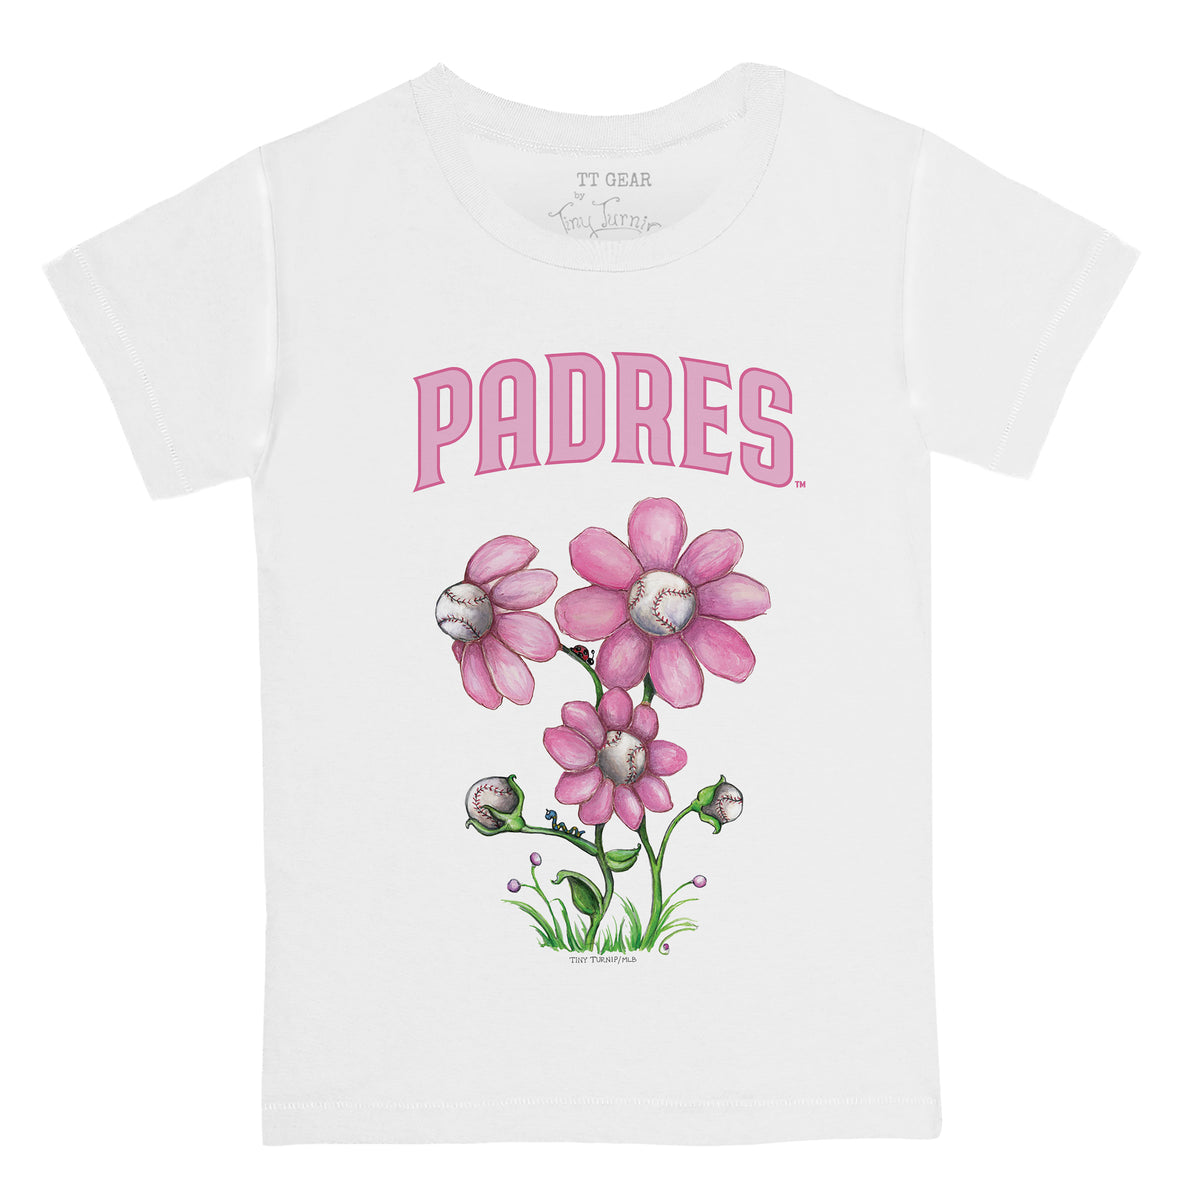 San Diego Padres Blooming Baseballs Tee Shirt